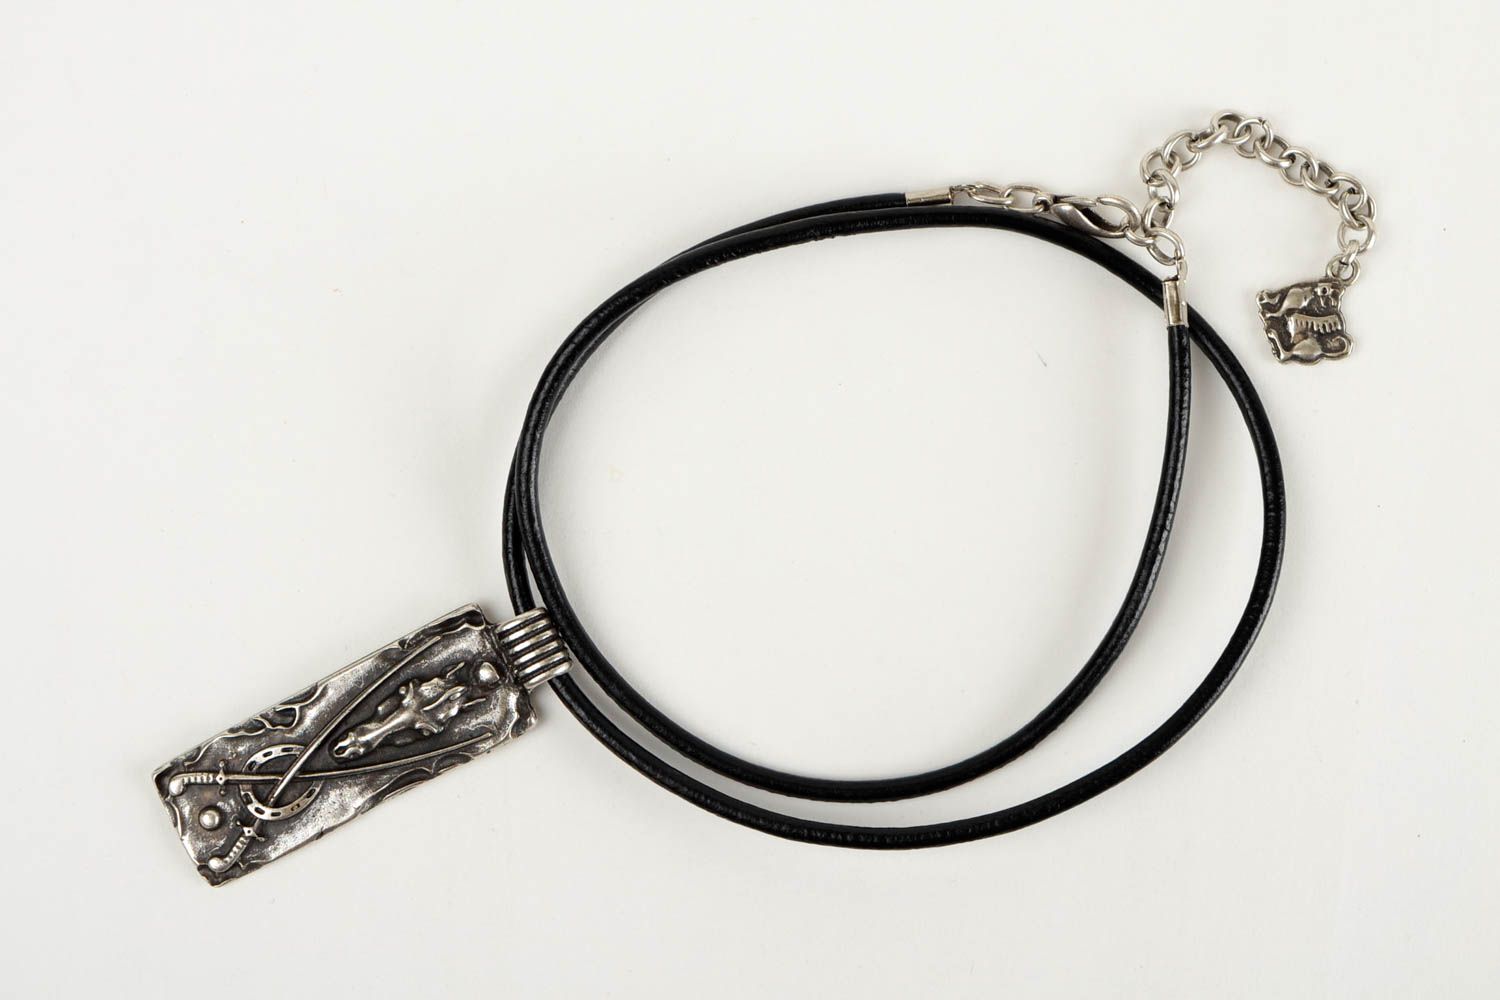 Unusual handmade metal pendant fashion accessories metal craft small gifts photo 4